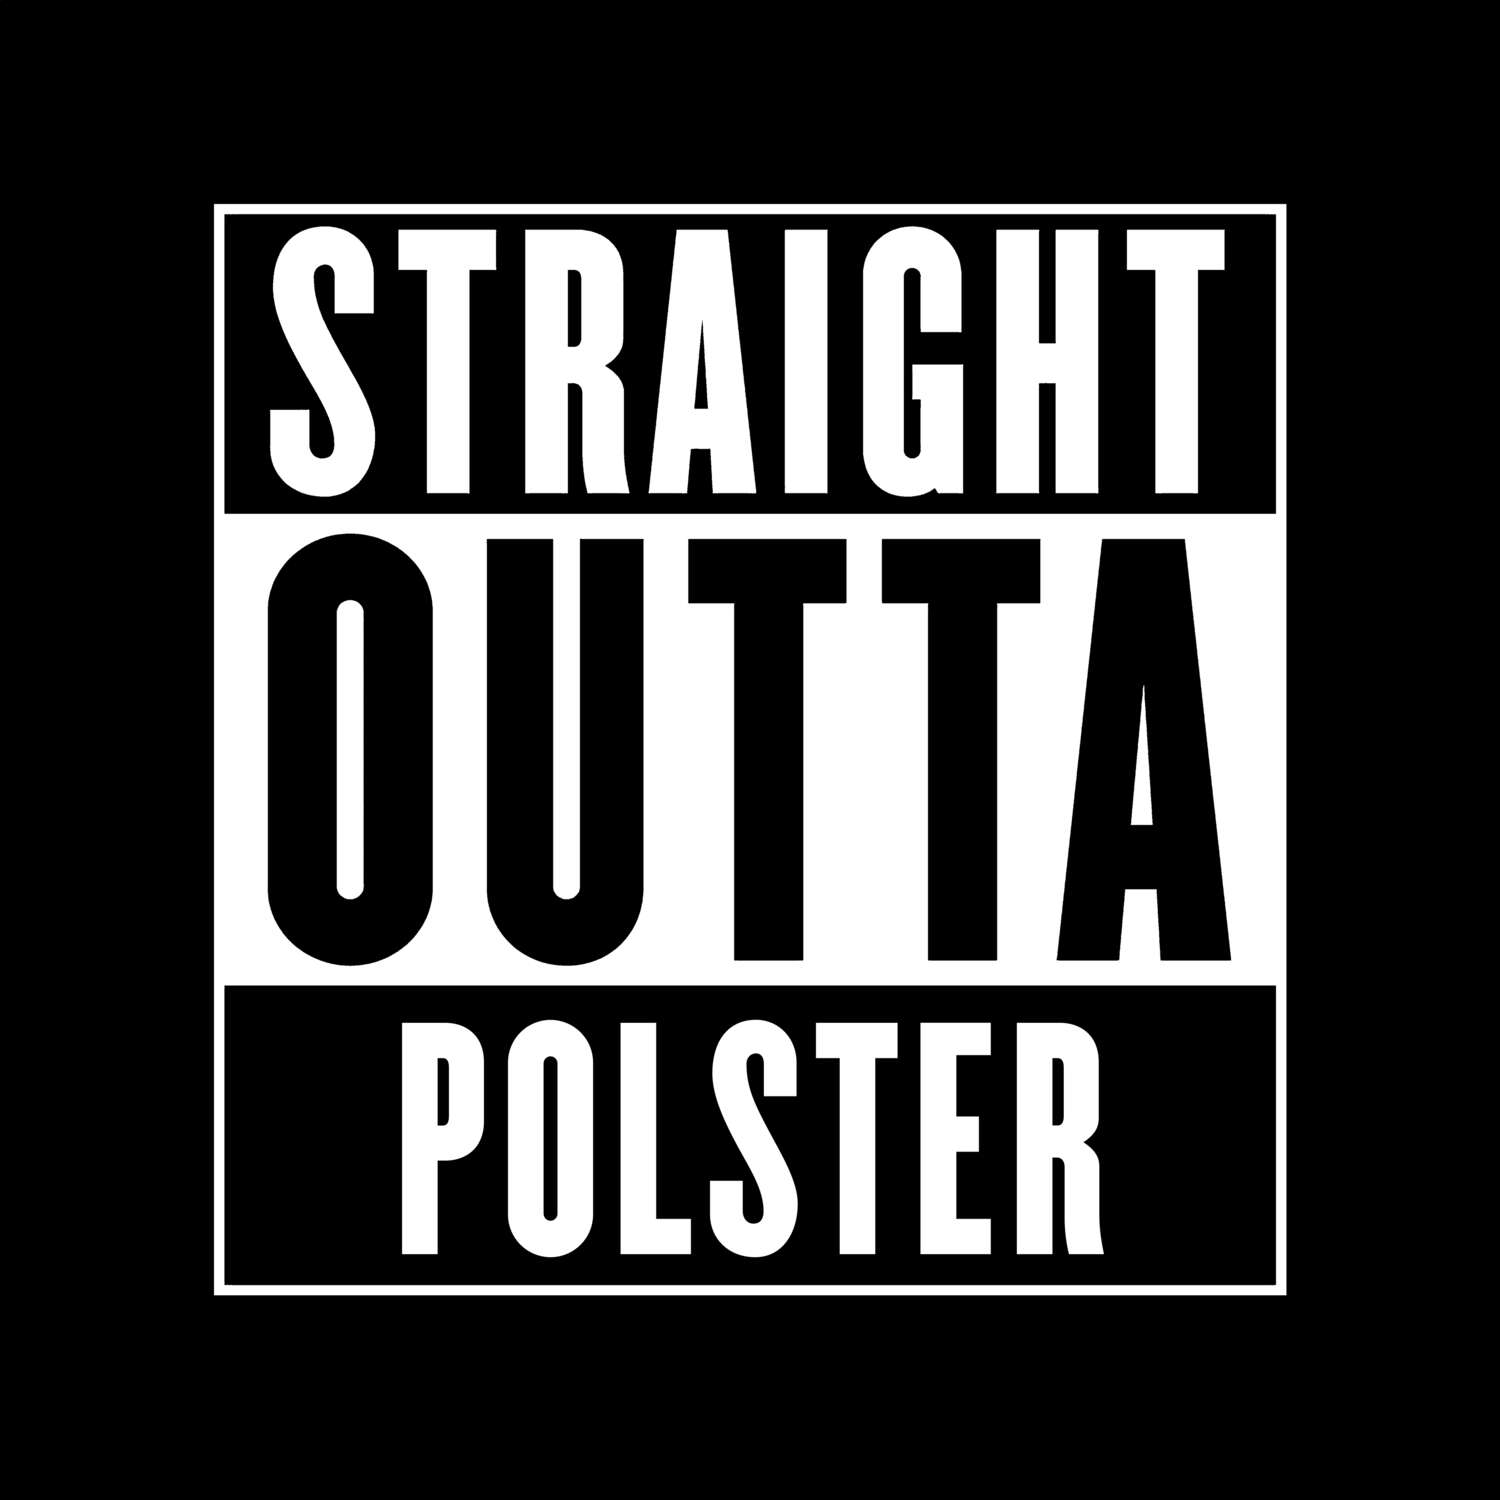 Polster T-Shirt »Straight Outta«